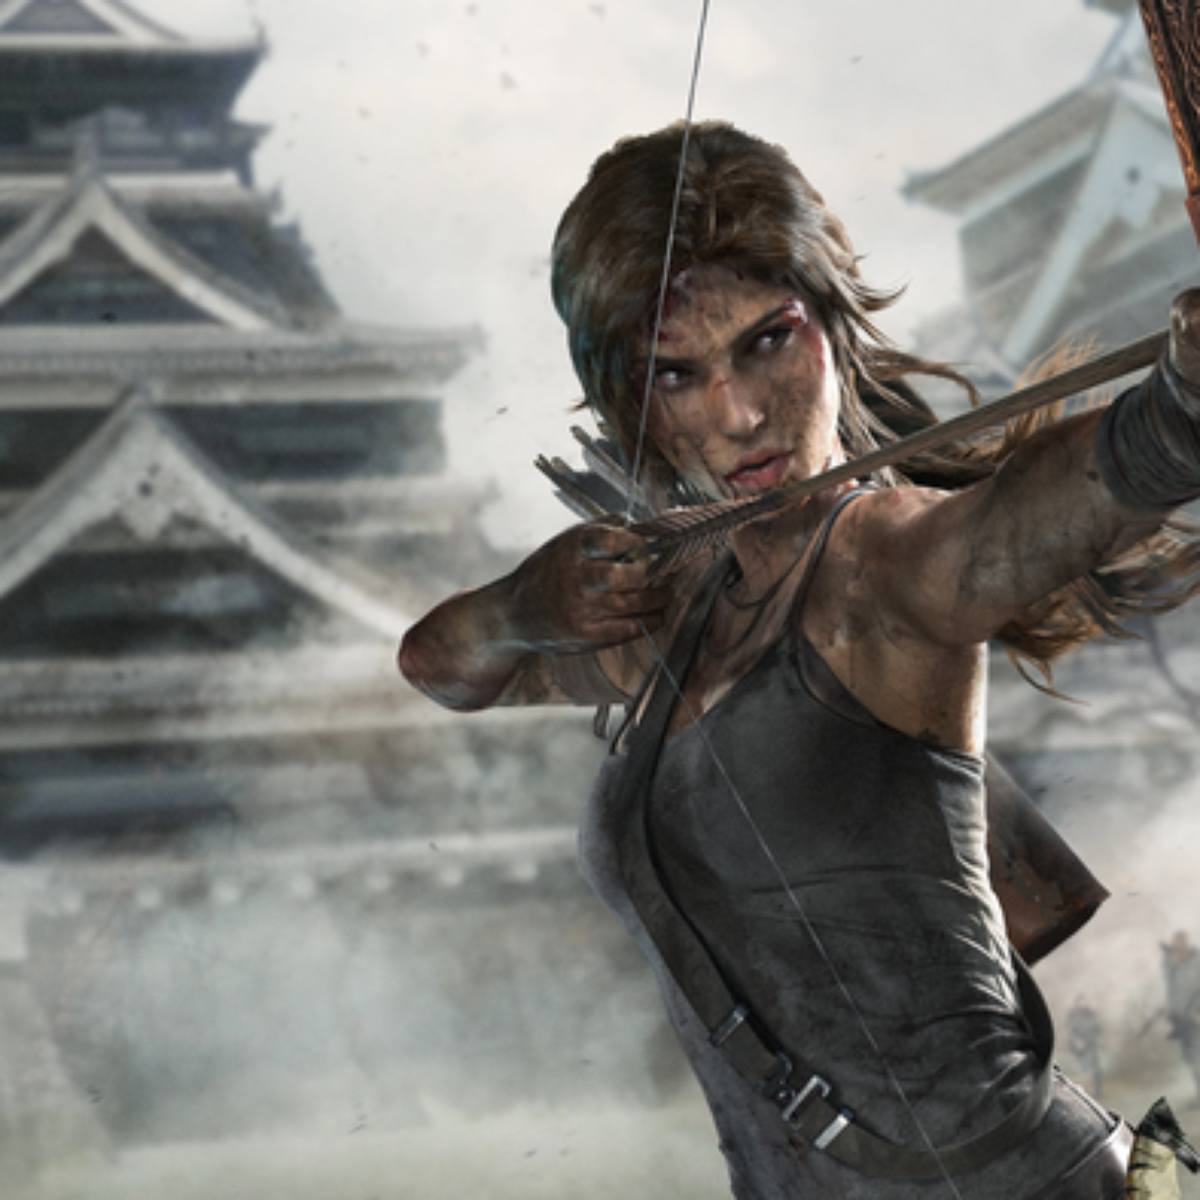 Moviente contar hasta carga A cronologia Tomb Raider; saiba a ordem dos jogos